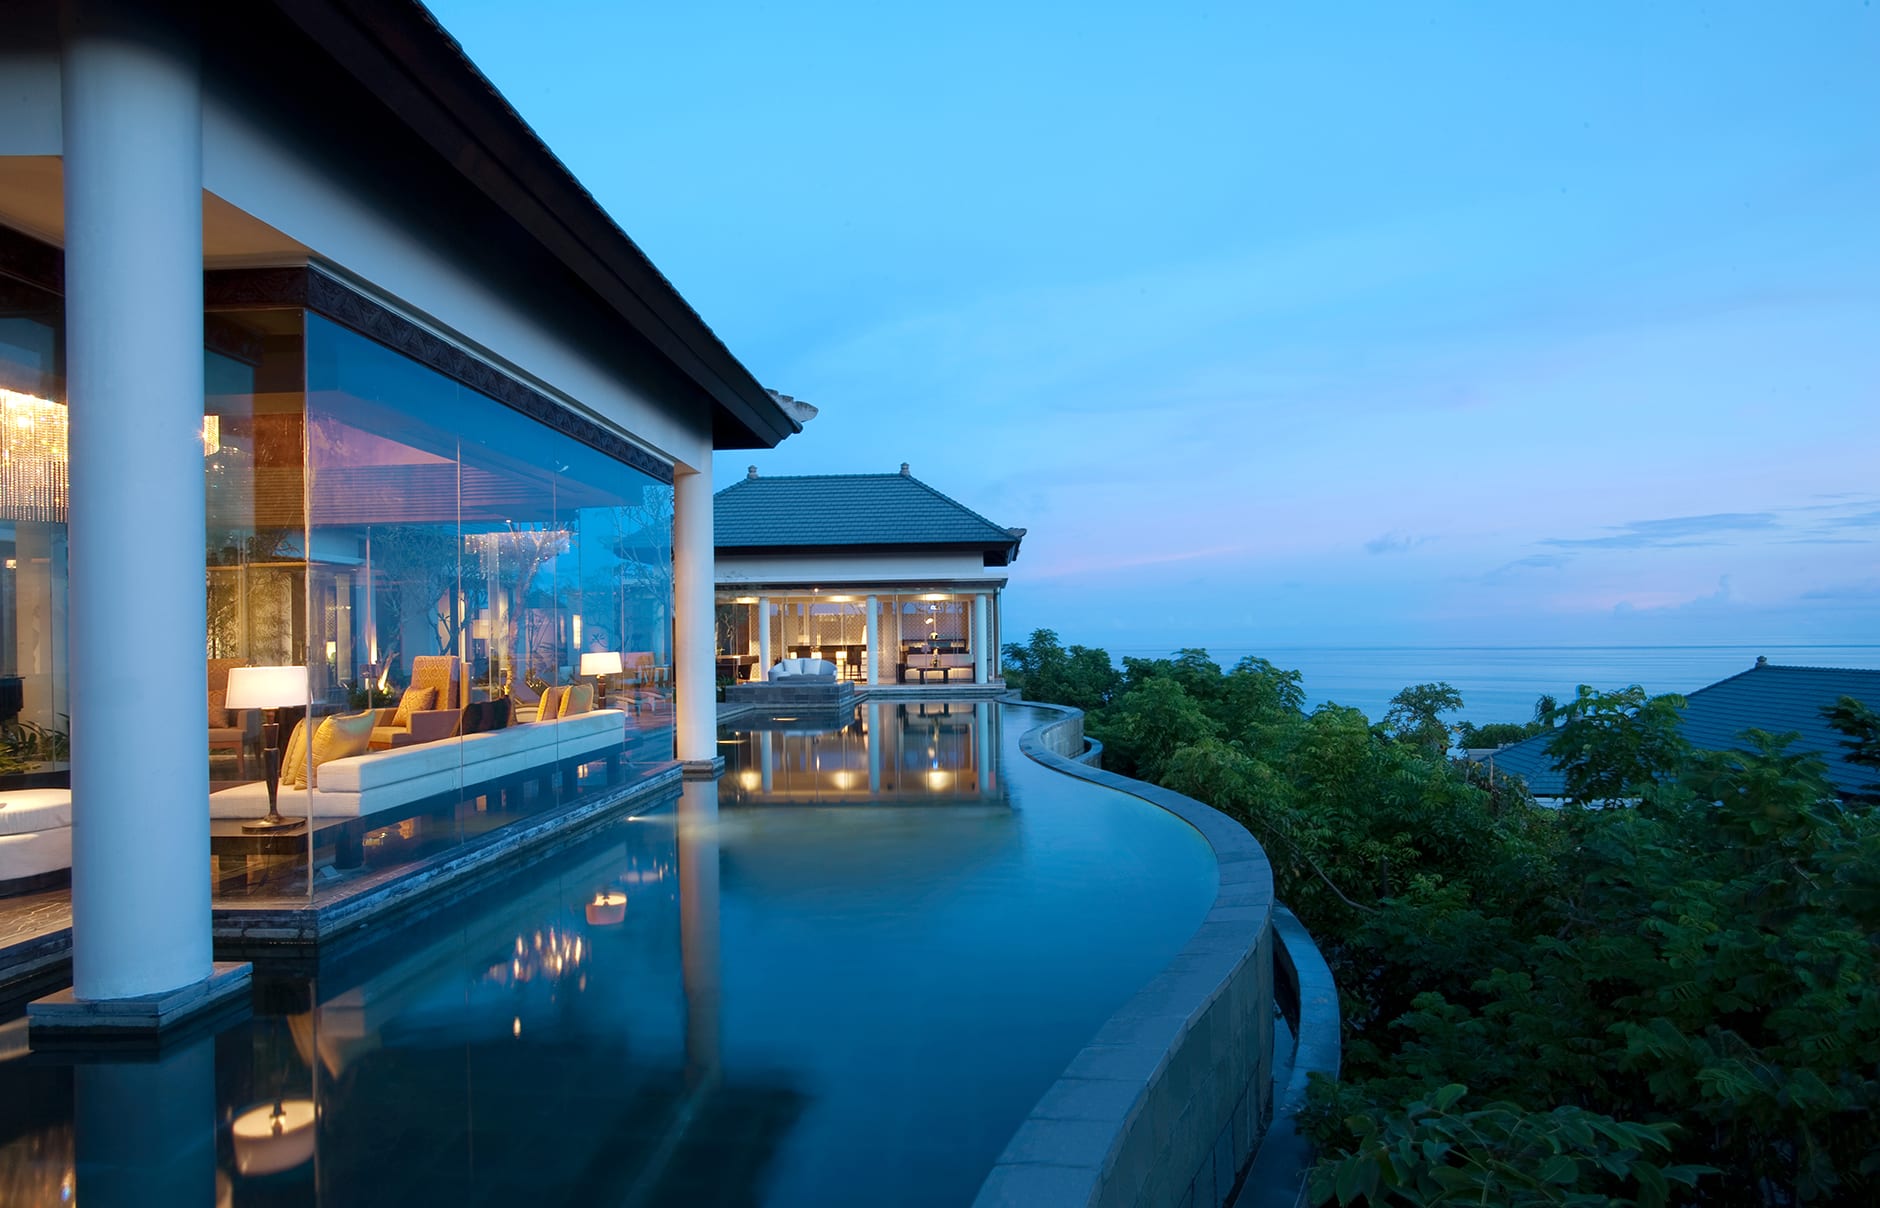 Banyan Tree Ungasan, Bali, Indonesia.  Hotel Review by TravelPlusStyle. Photo © Banyan Tree Hotels & Resorts